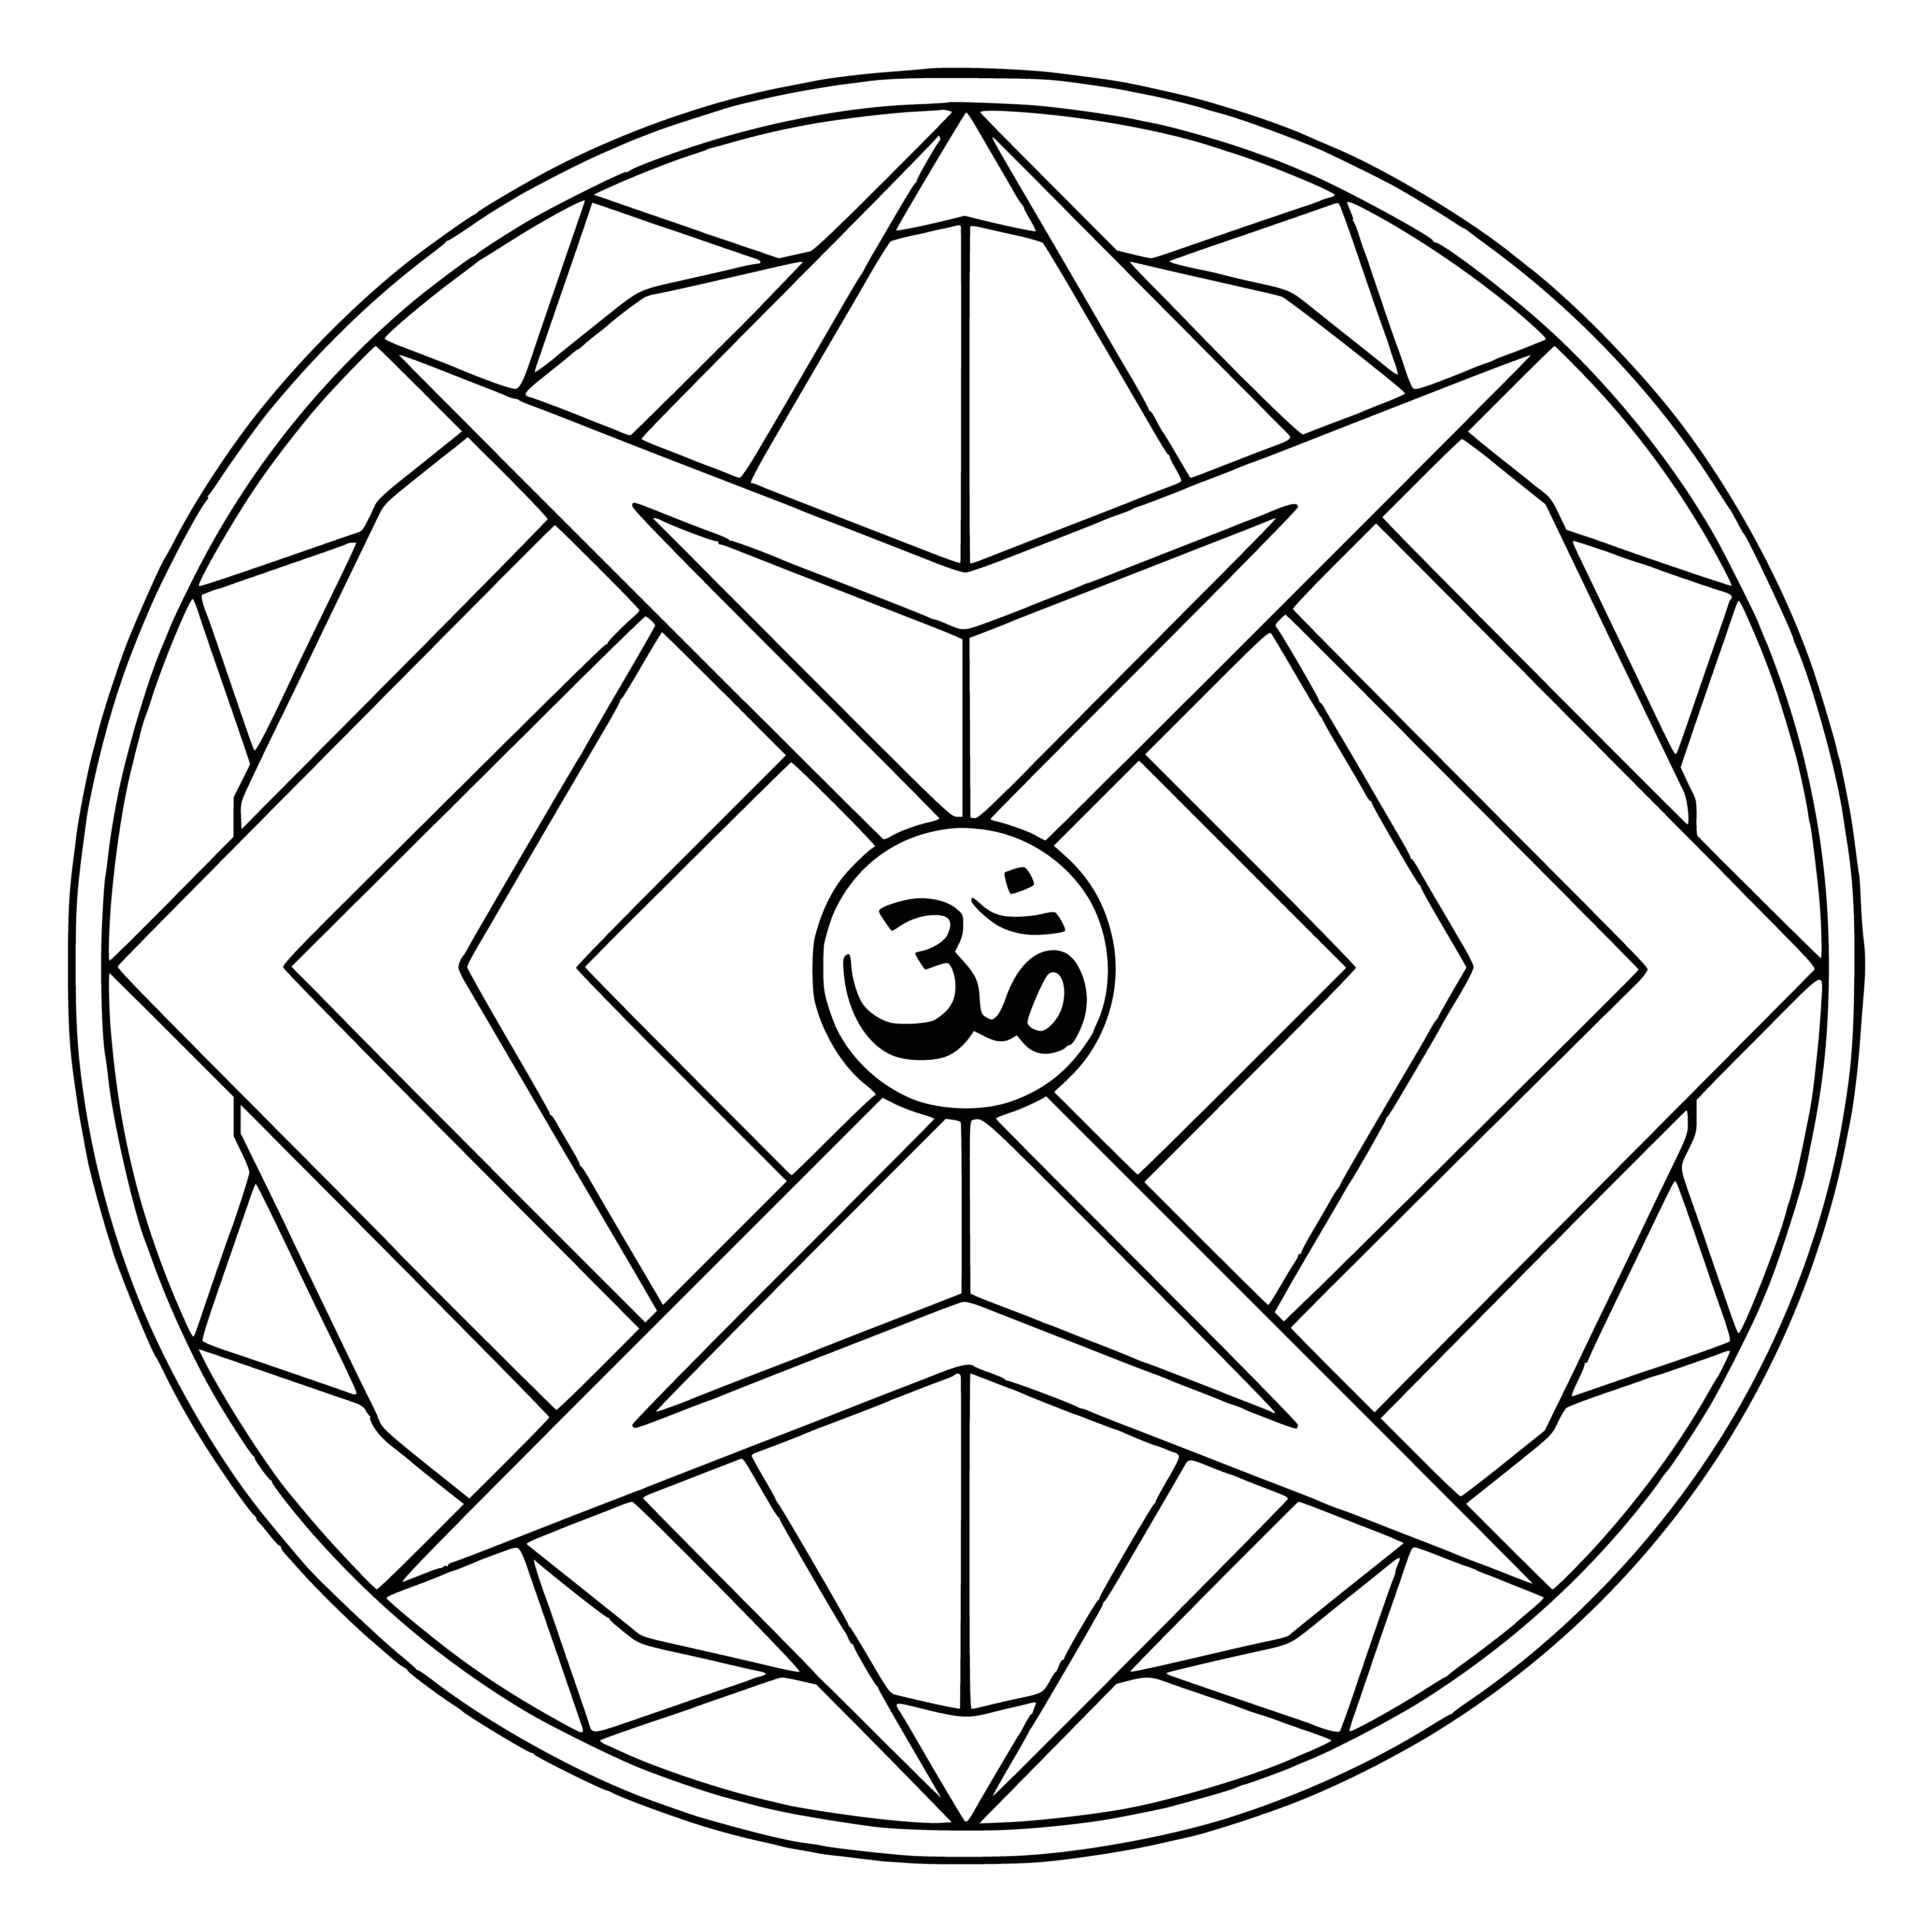 Geometric mandala with Om symbol coloring page